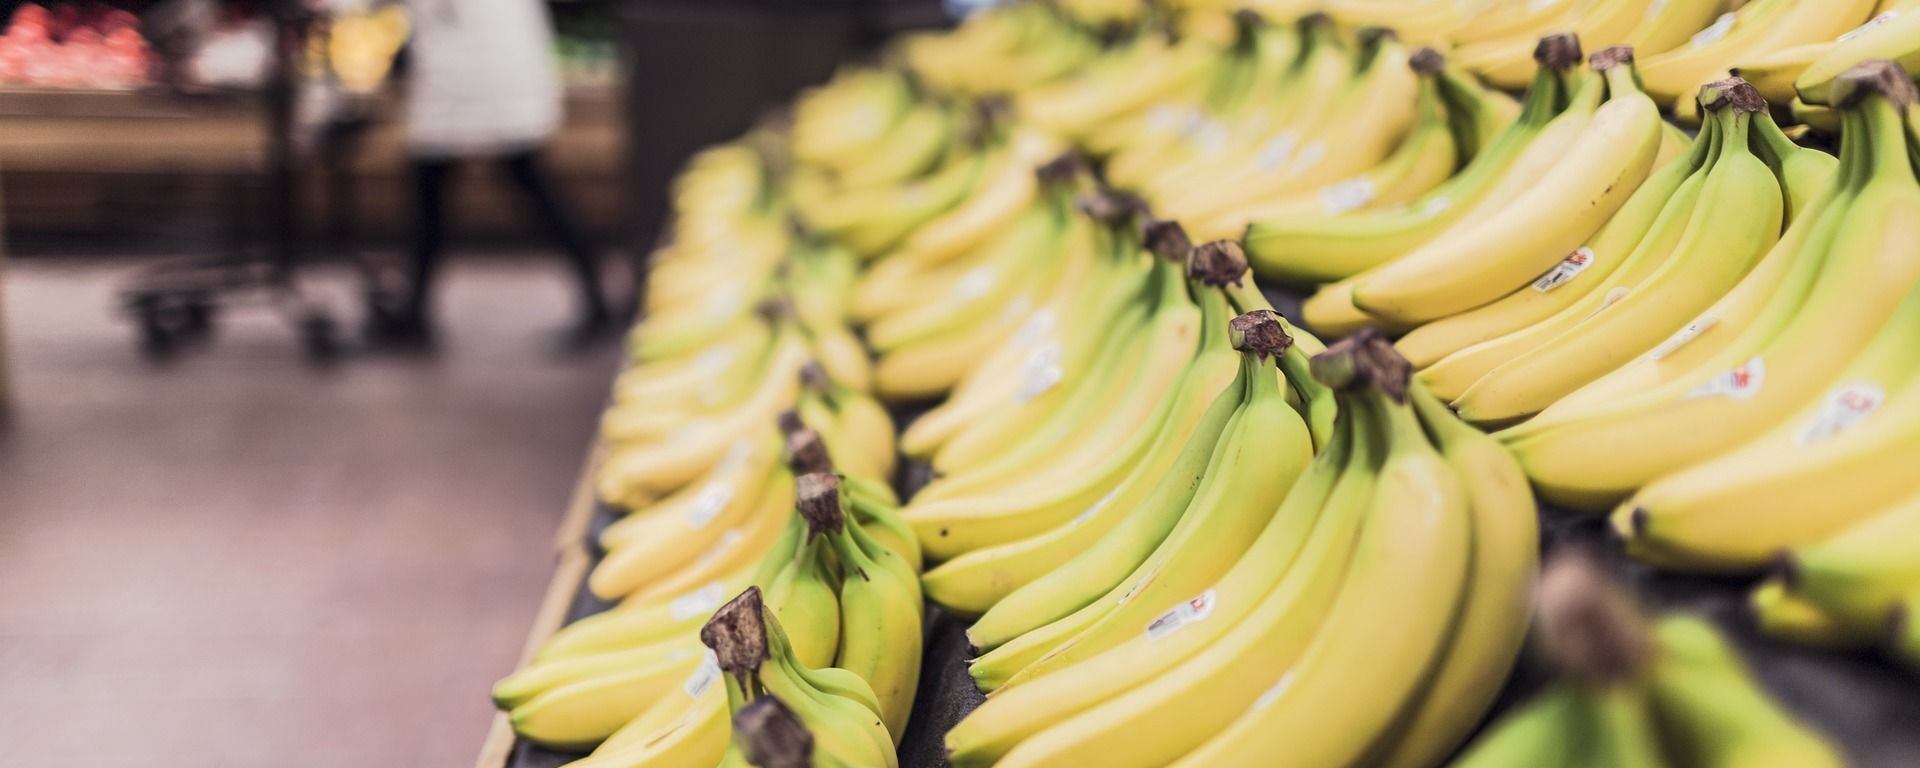 Бананы в супермаркете - Sputnik Грузия, 1920, 14.04.2021